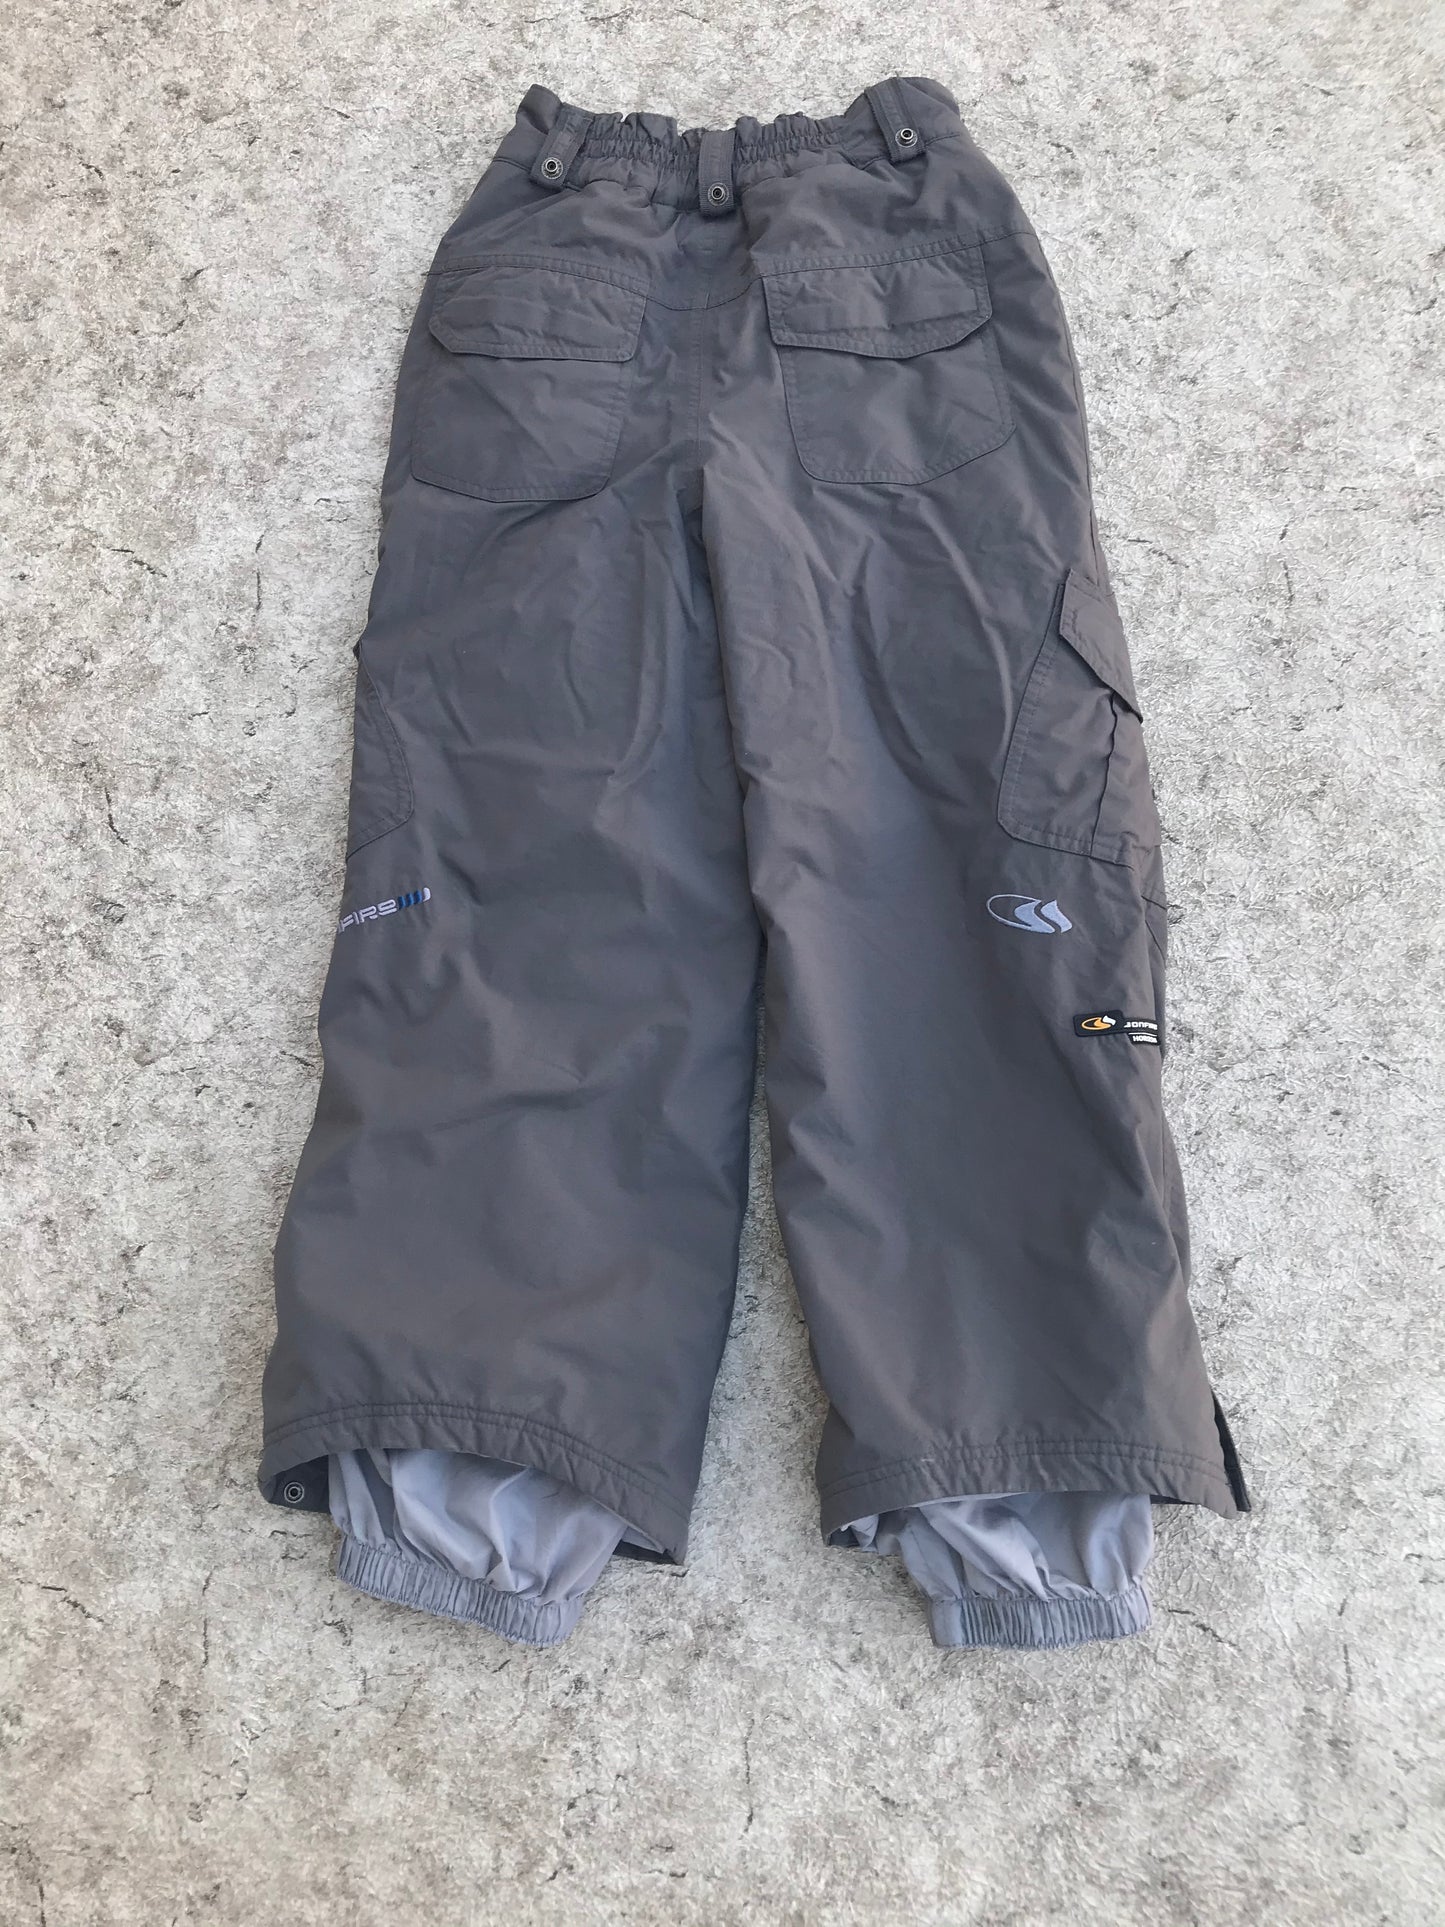 Snow Pants Child Size 8-10 Bonfire Micro Fleece Lined Inside Gravel Grey  Snowboarding As New